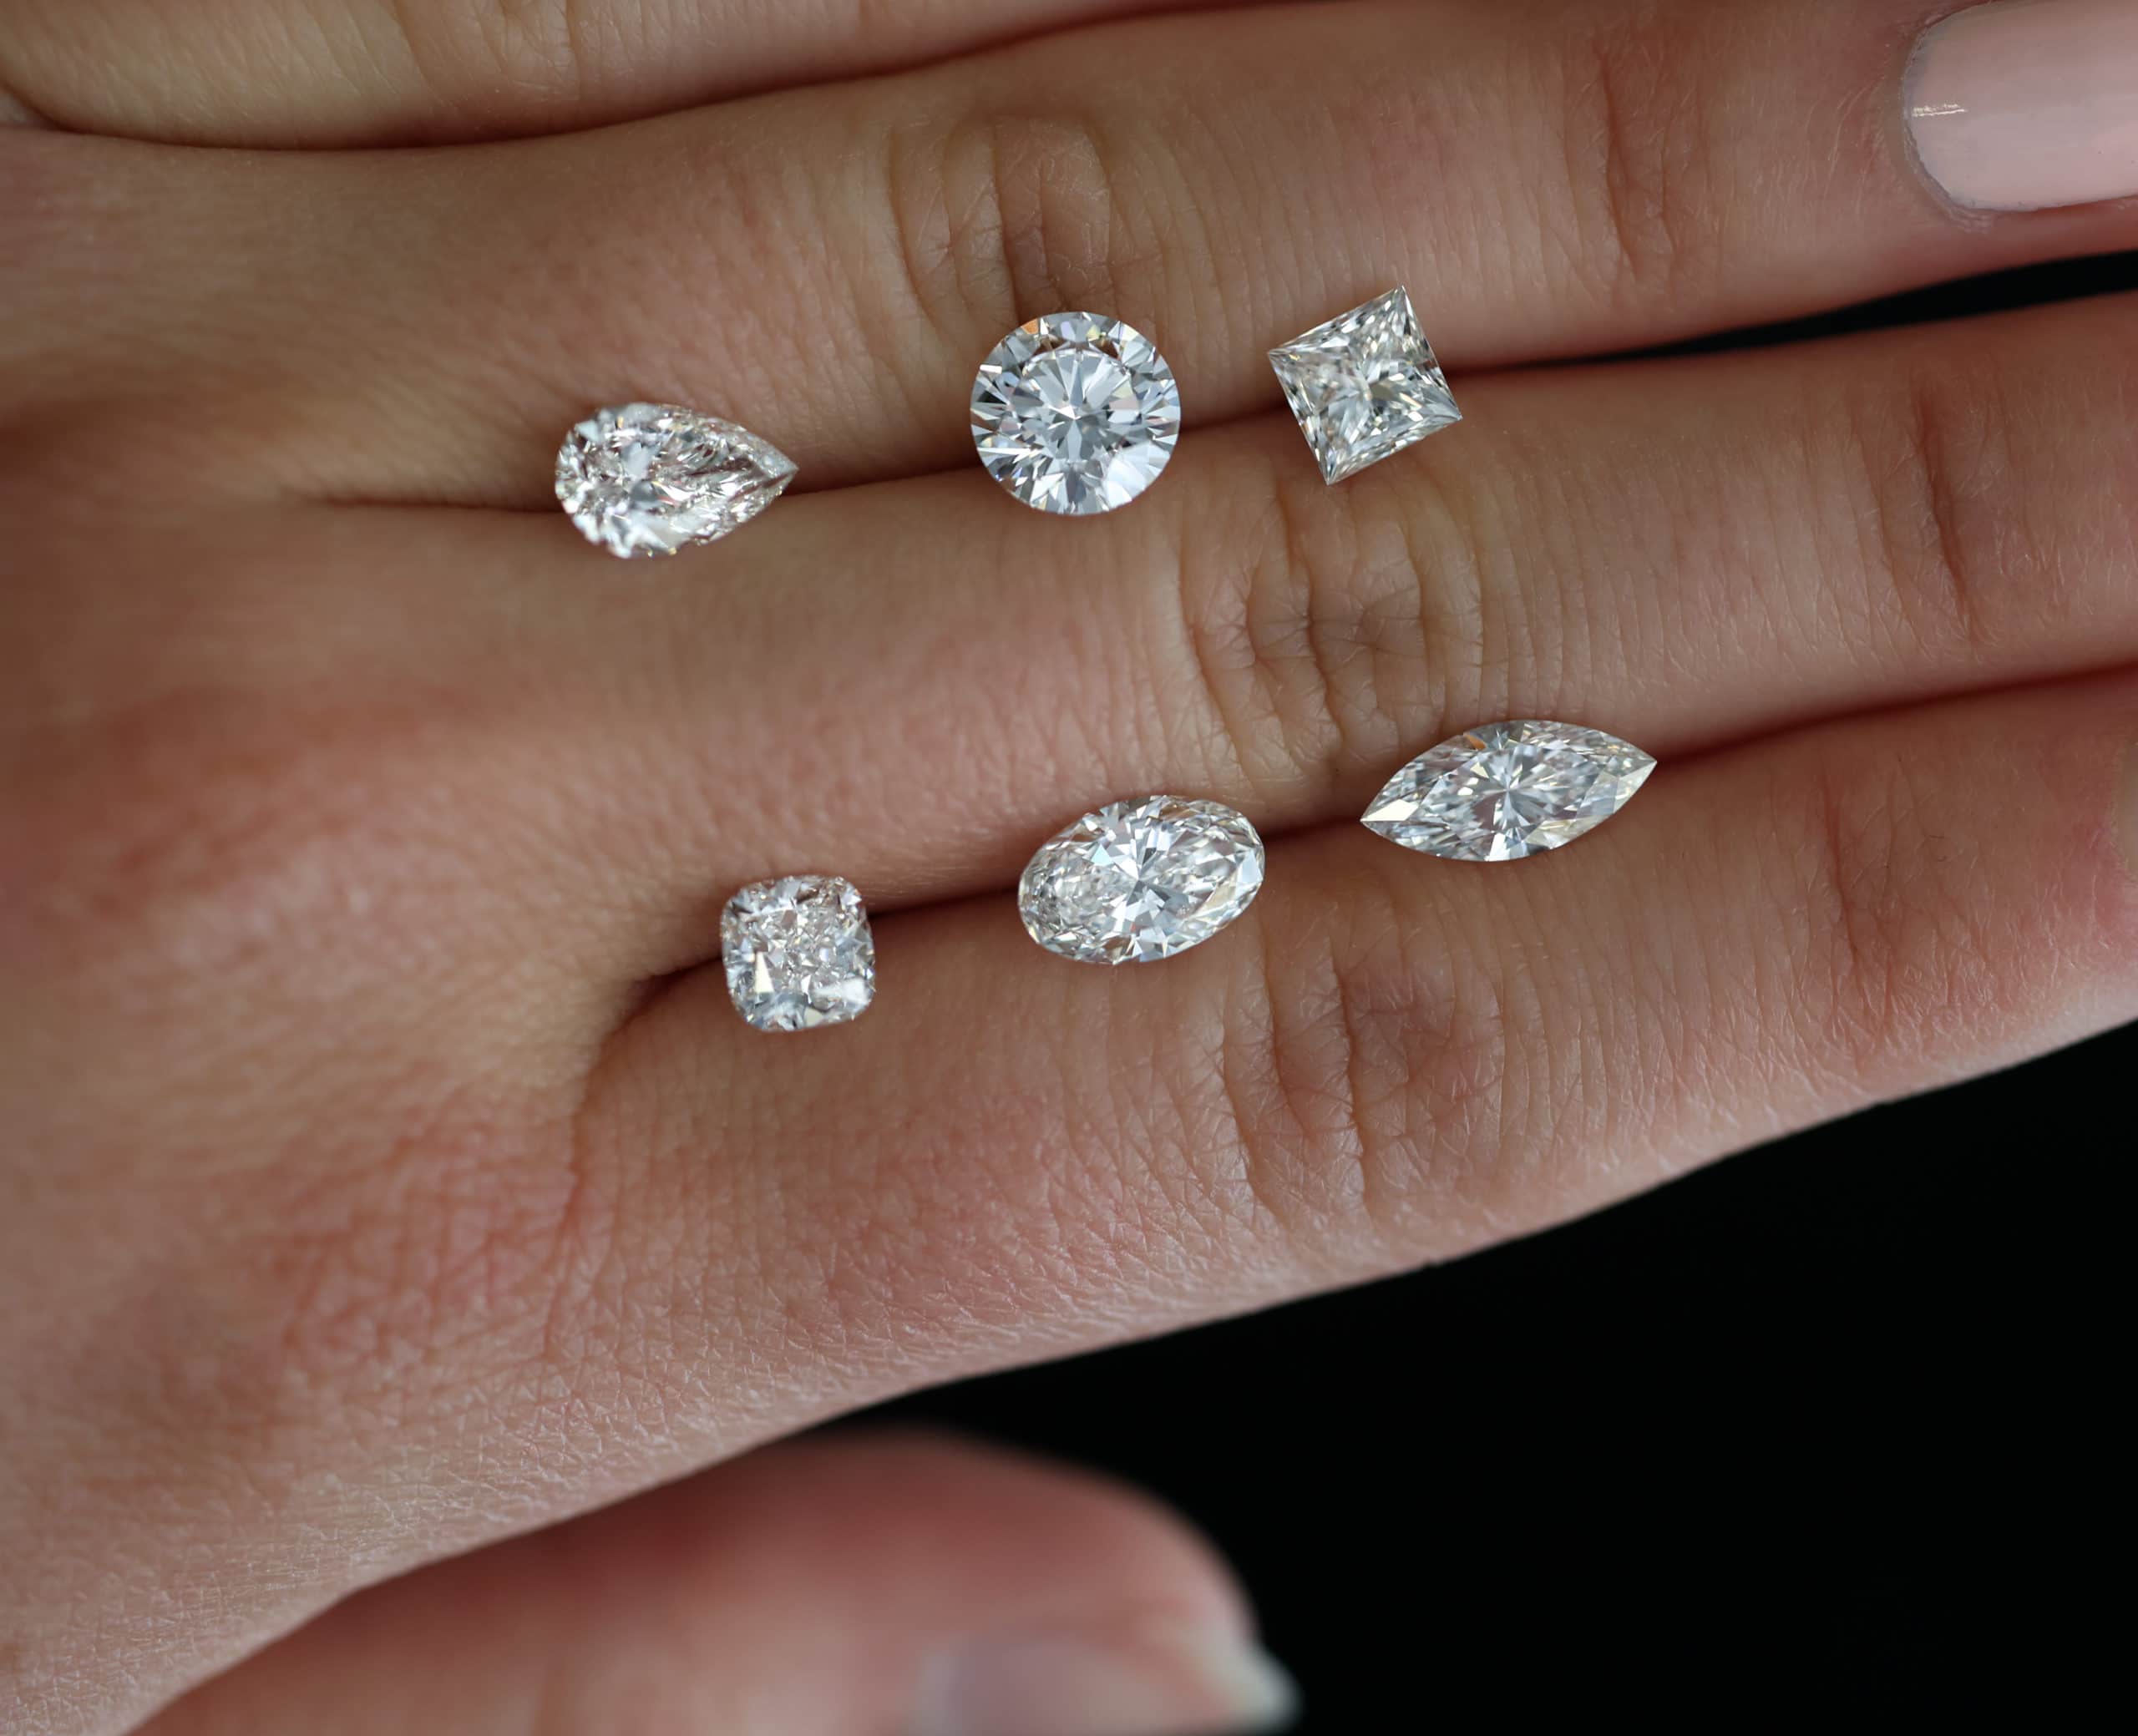 kanker opgraven Versterker 1-Carat Diamond Ring Price Guide | Diamondport